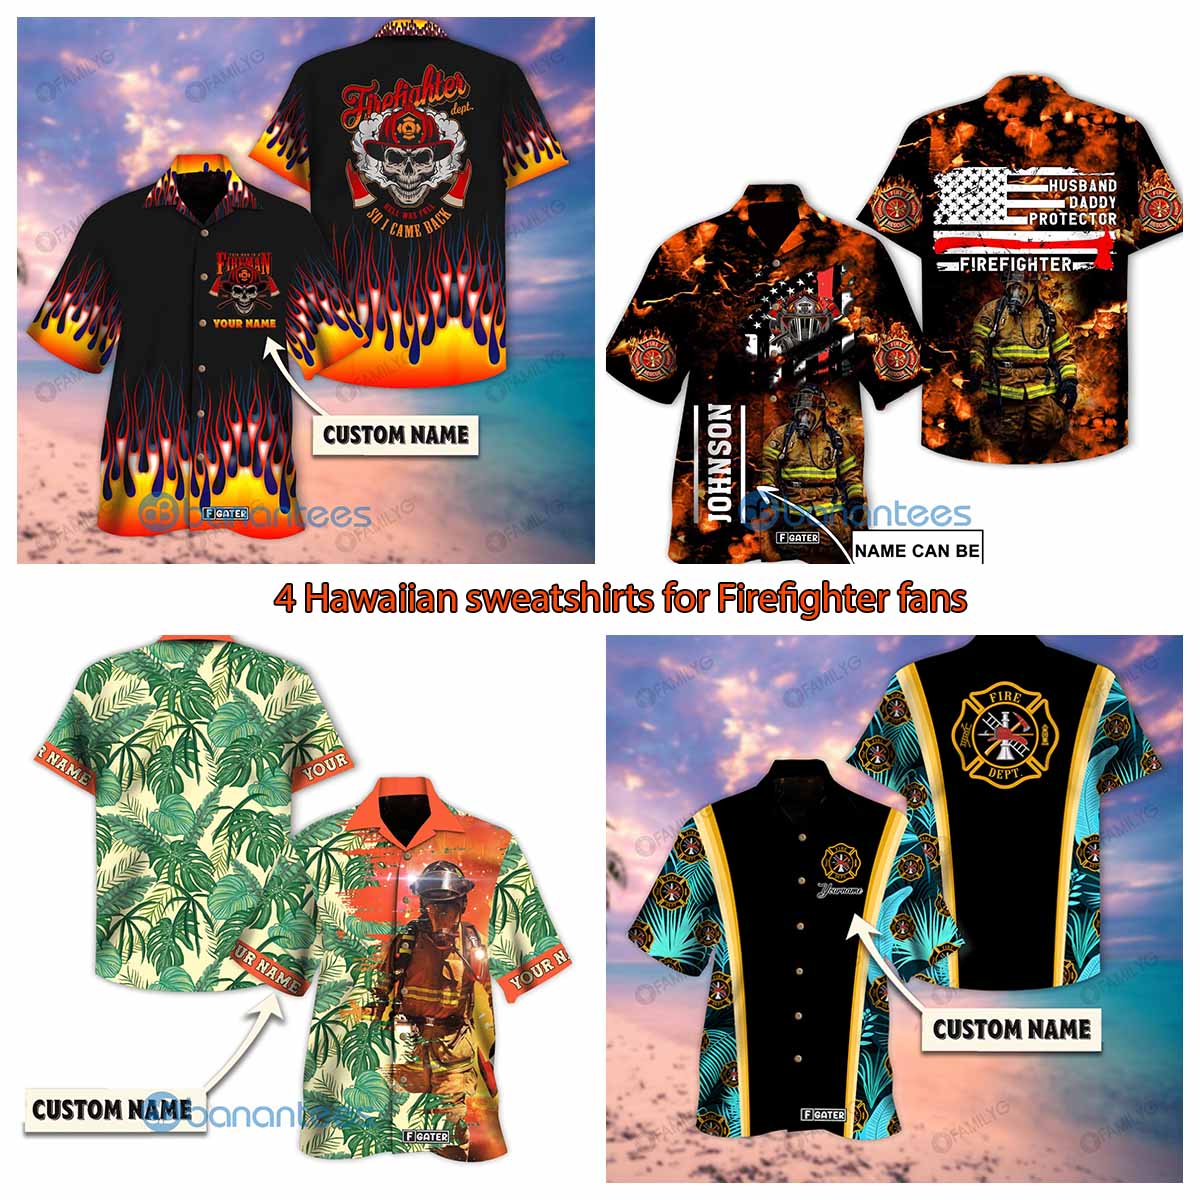 4 Hawaiian sweatshirts for Firefighter fans